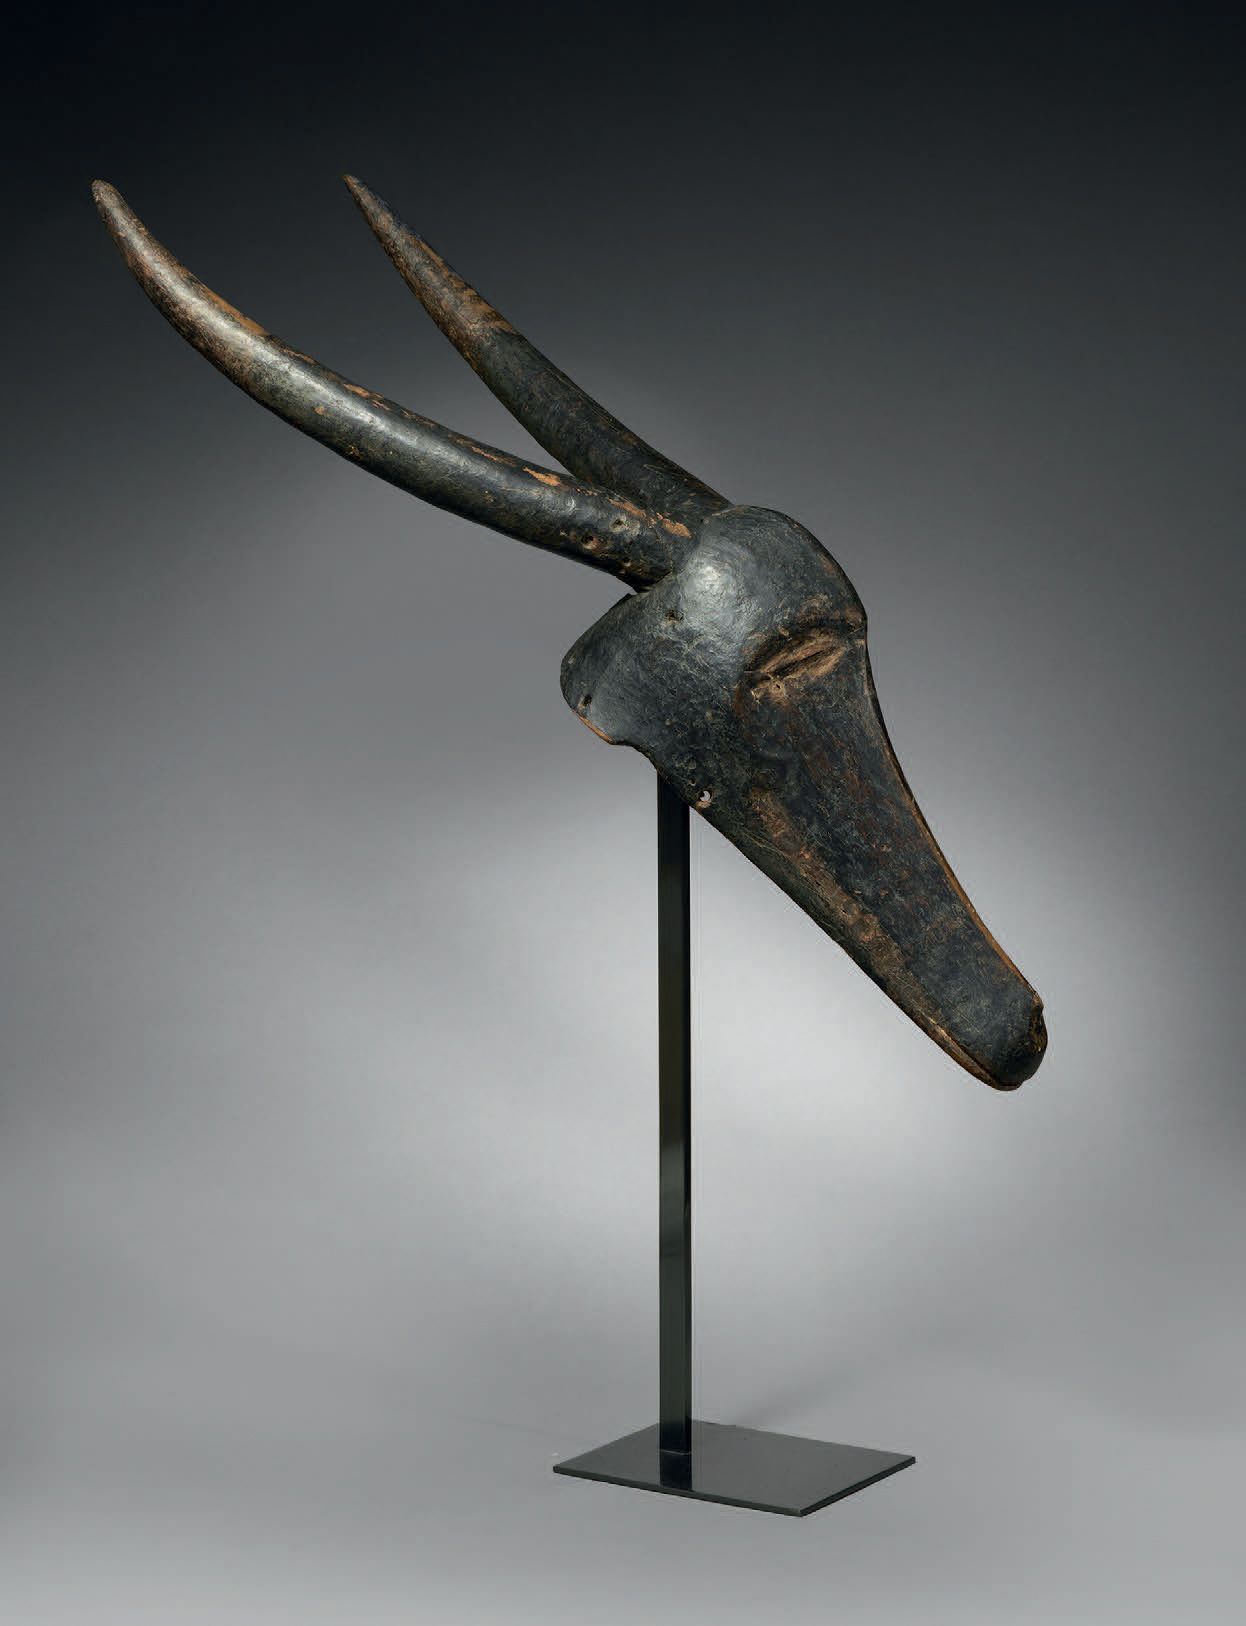 Null Masque animalier Ijo
Nigeria
Bois
H. 84 cm
Les Ijo établis le long de la cô&hellip;